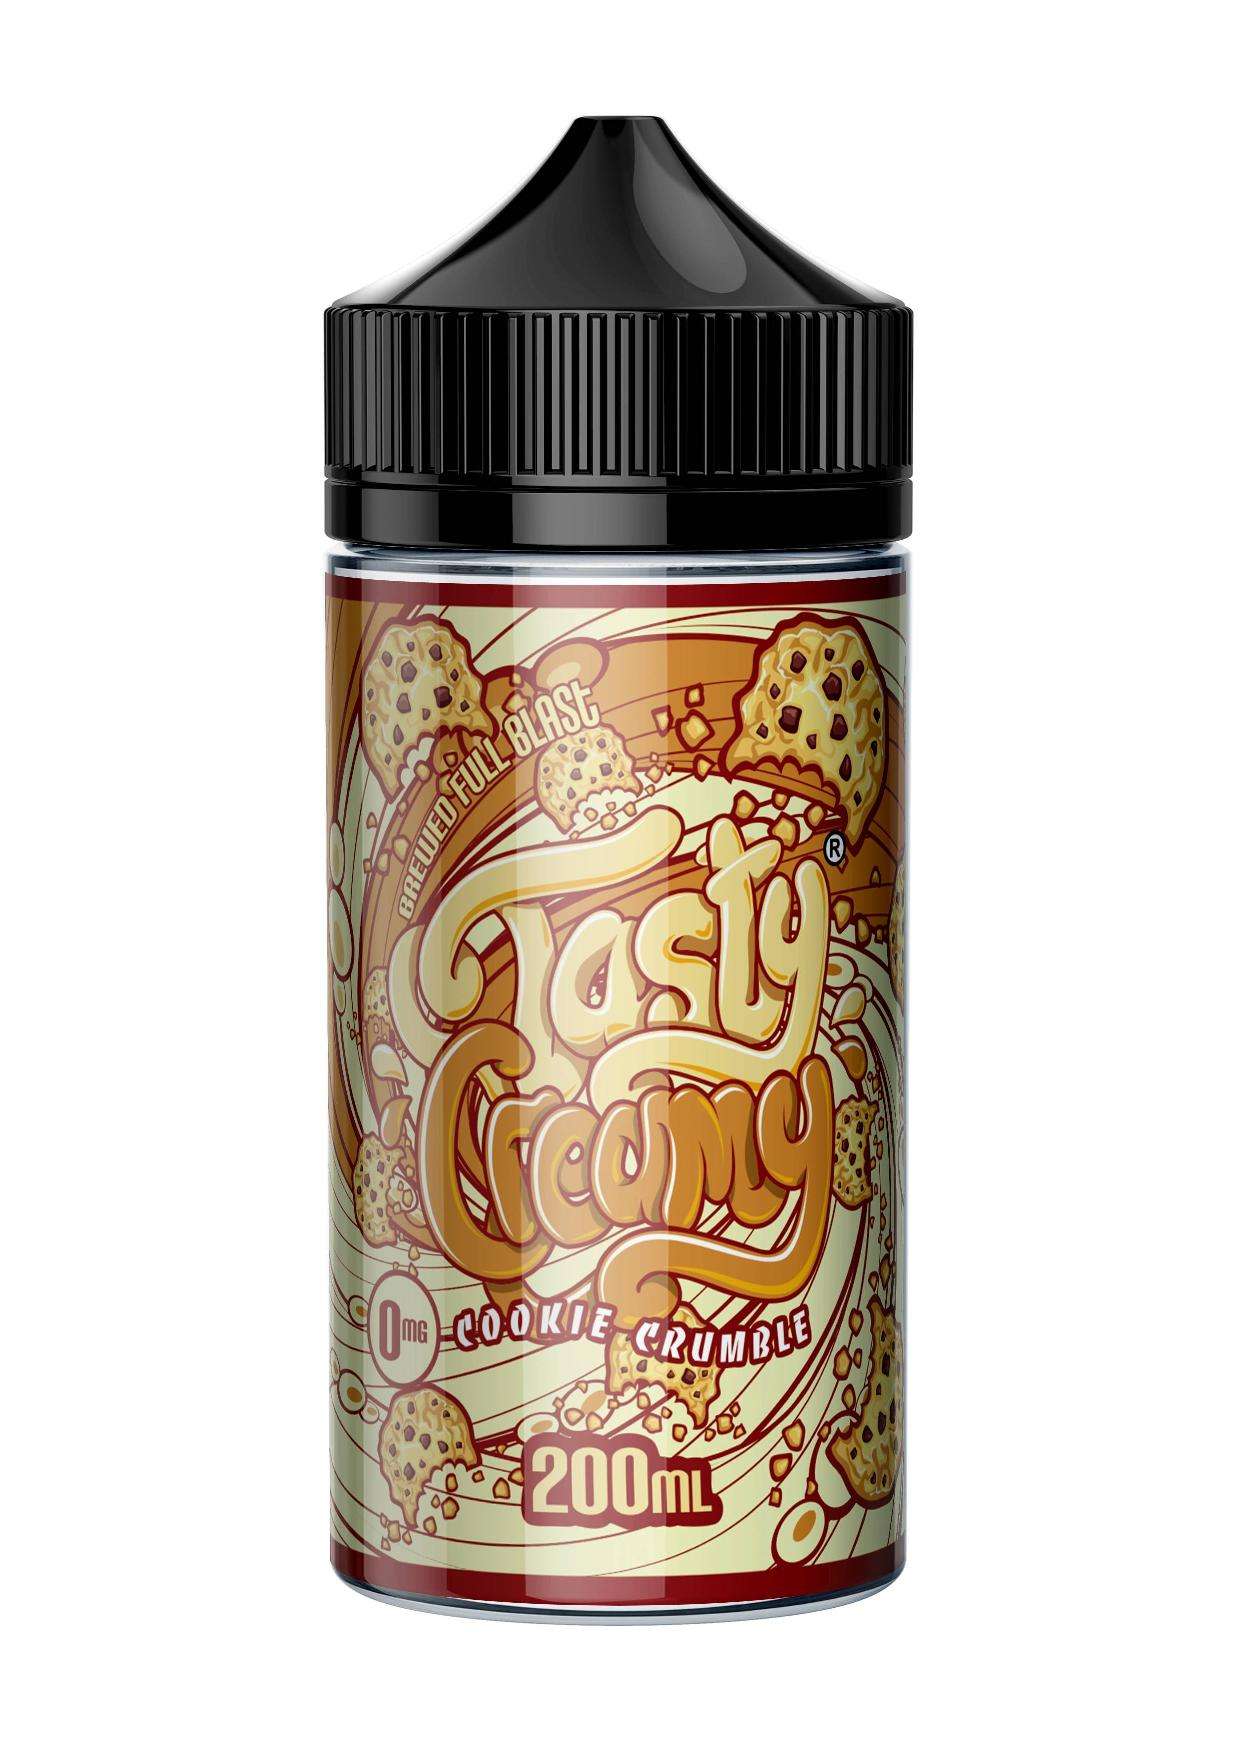  Tasty Creamy - Cookie Crumble - 200ml 